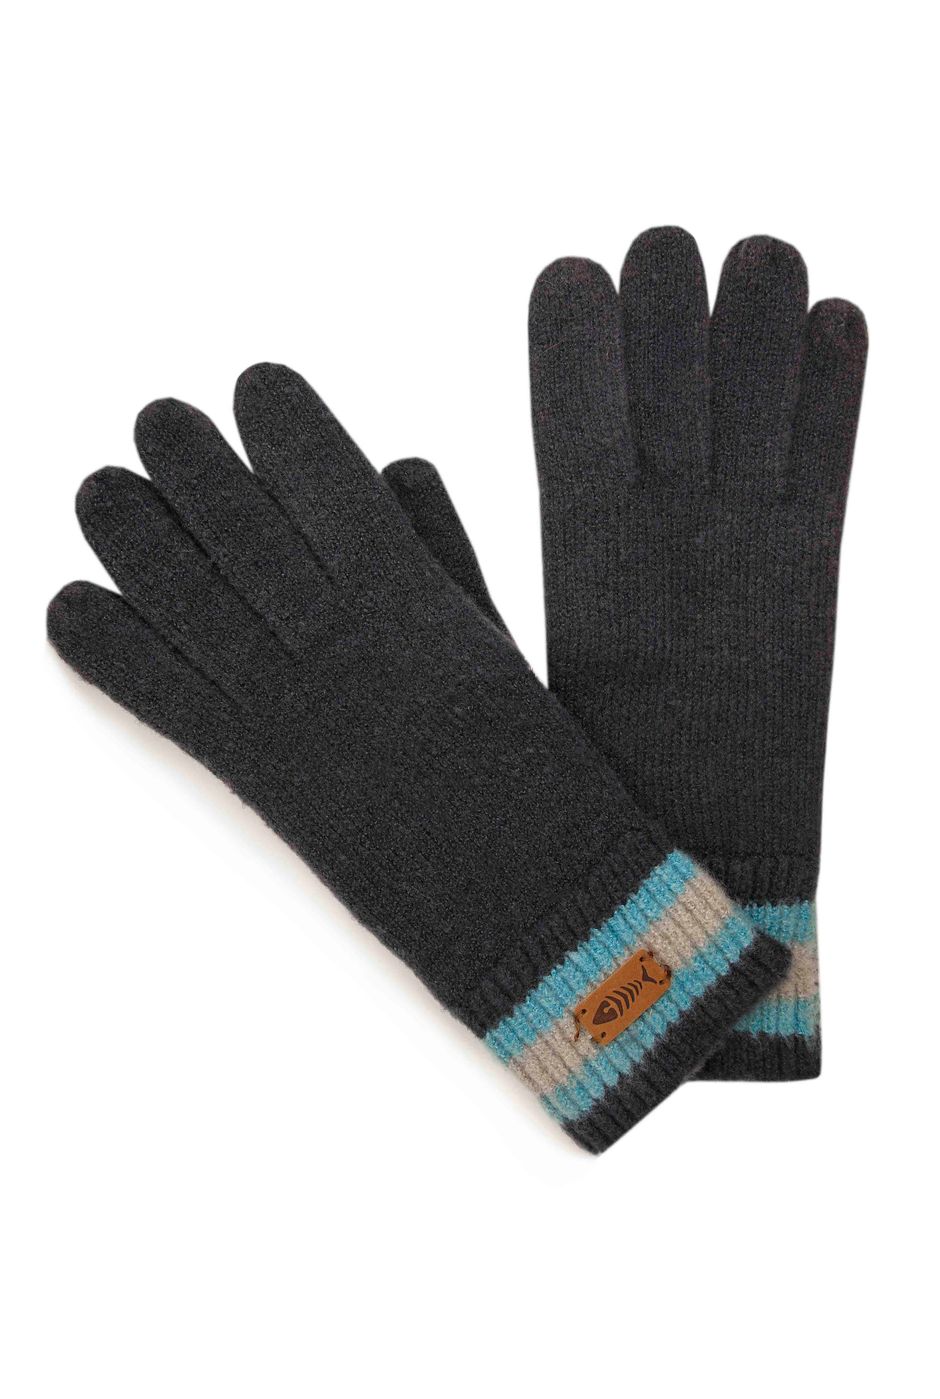 Kodiak Recycled Striped Gloves  Midnight